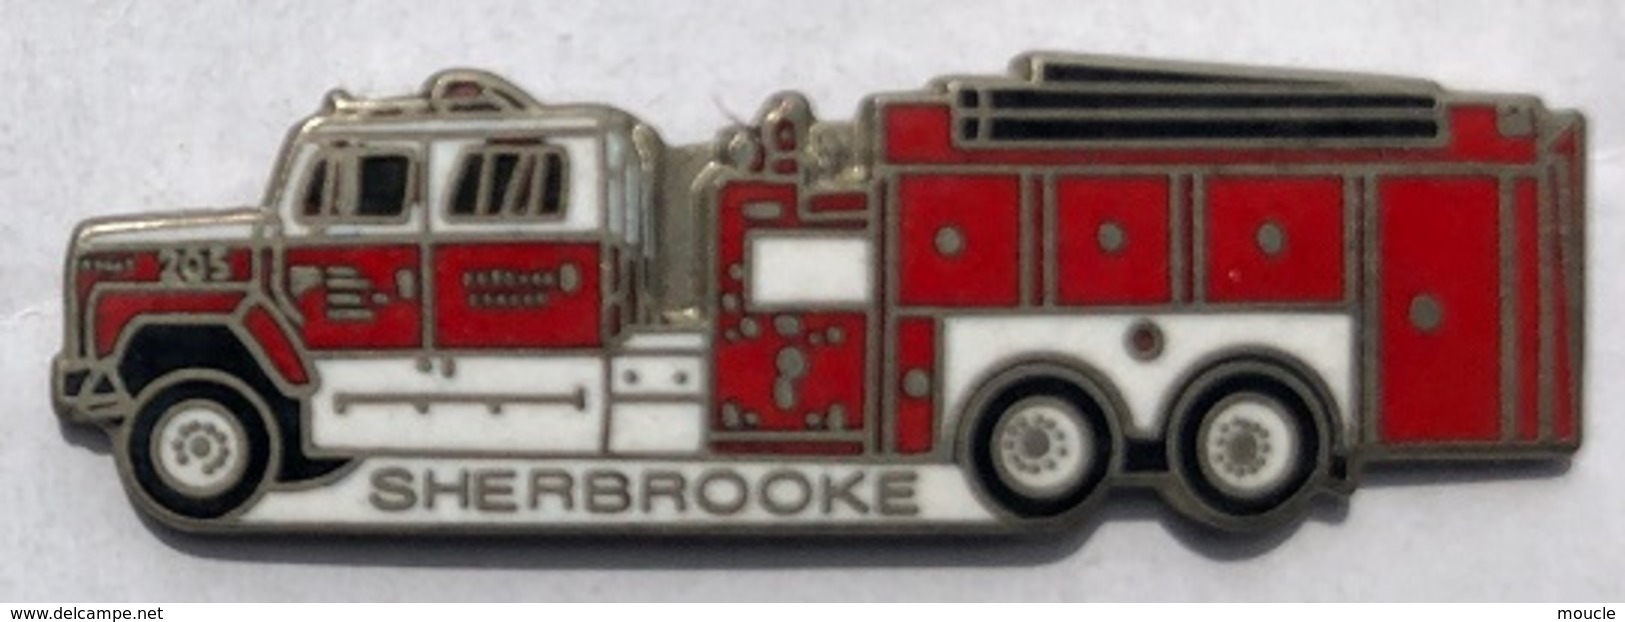 SAPEURS POMPIERS SHERBROOKE  - SERVICE DU FEU - CAMION - TRUCK FIREFIGHTERS - LKW - FEUERWEHRMANN - USA - US - (24) - Firemen